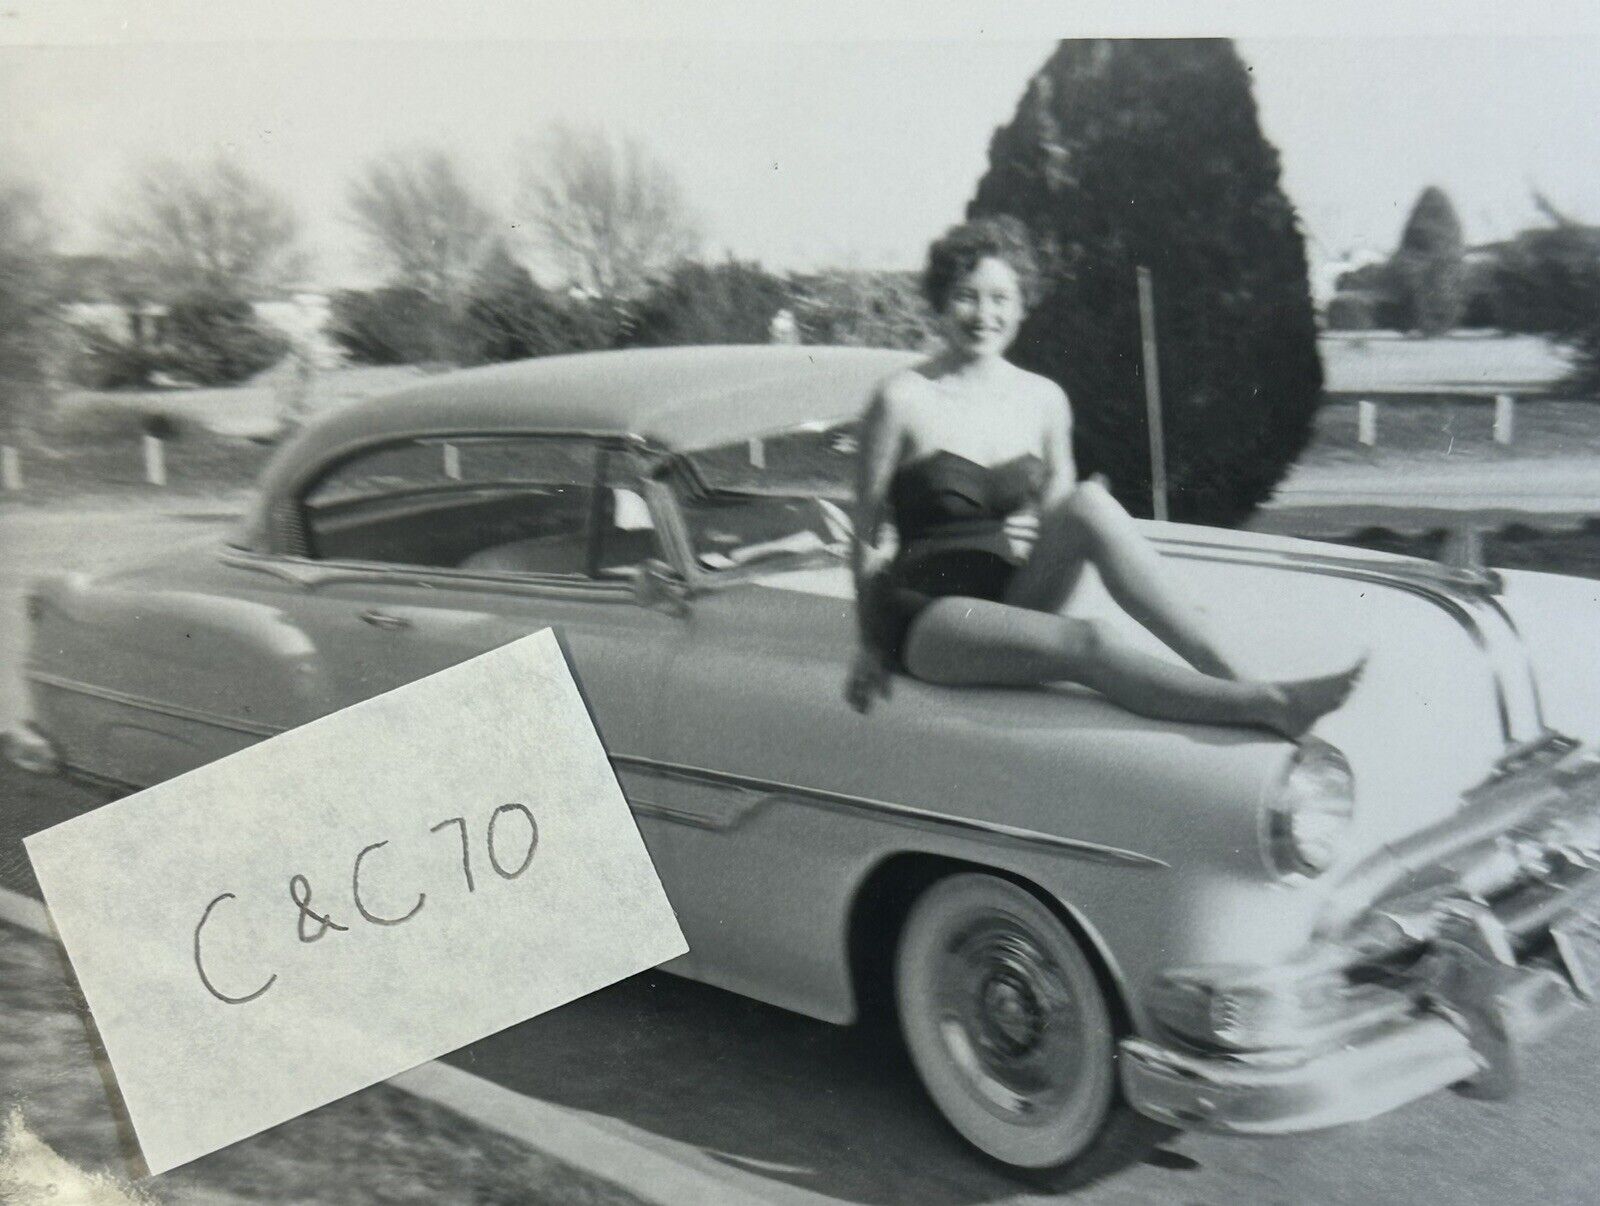 1953 Pontiac Original Black & White Car Photo, Woman In Bathing Suit